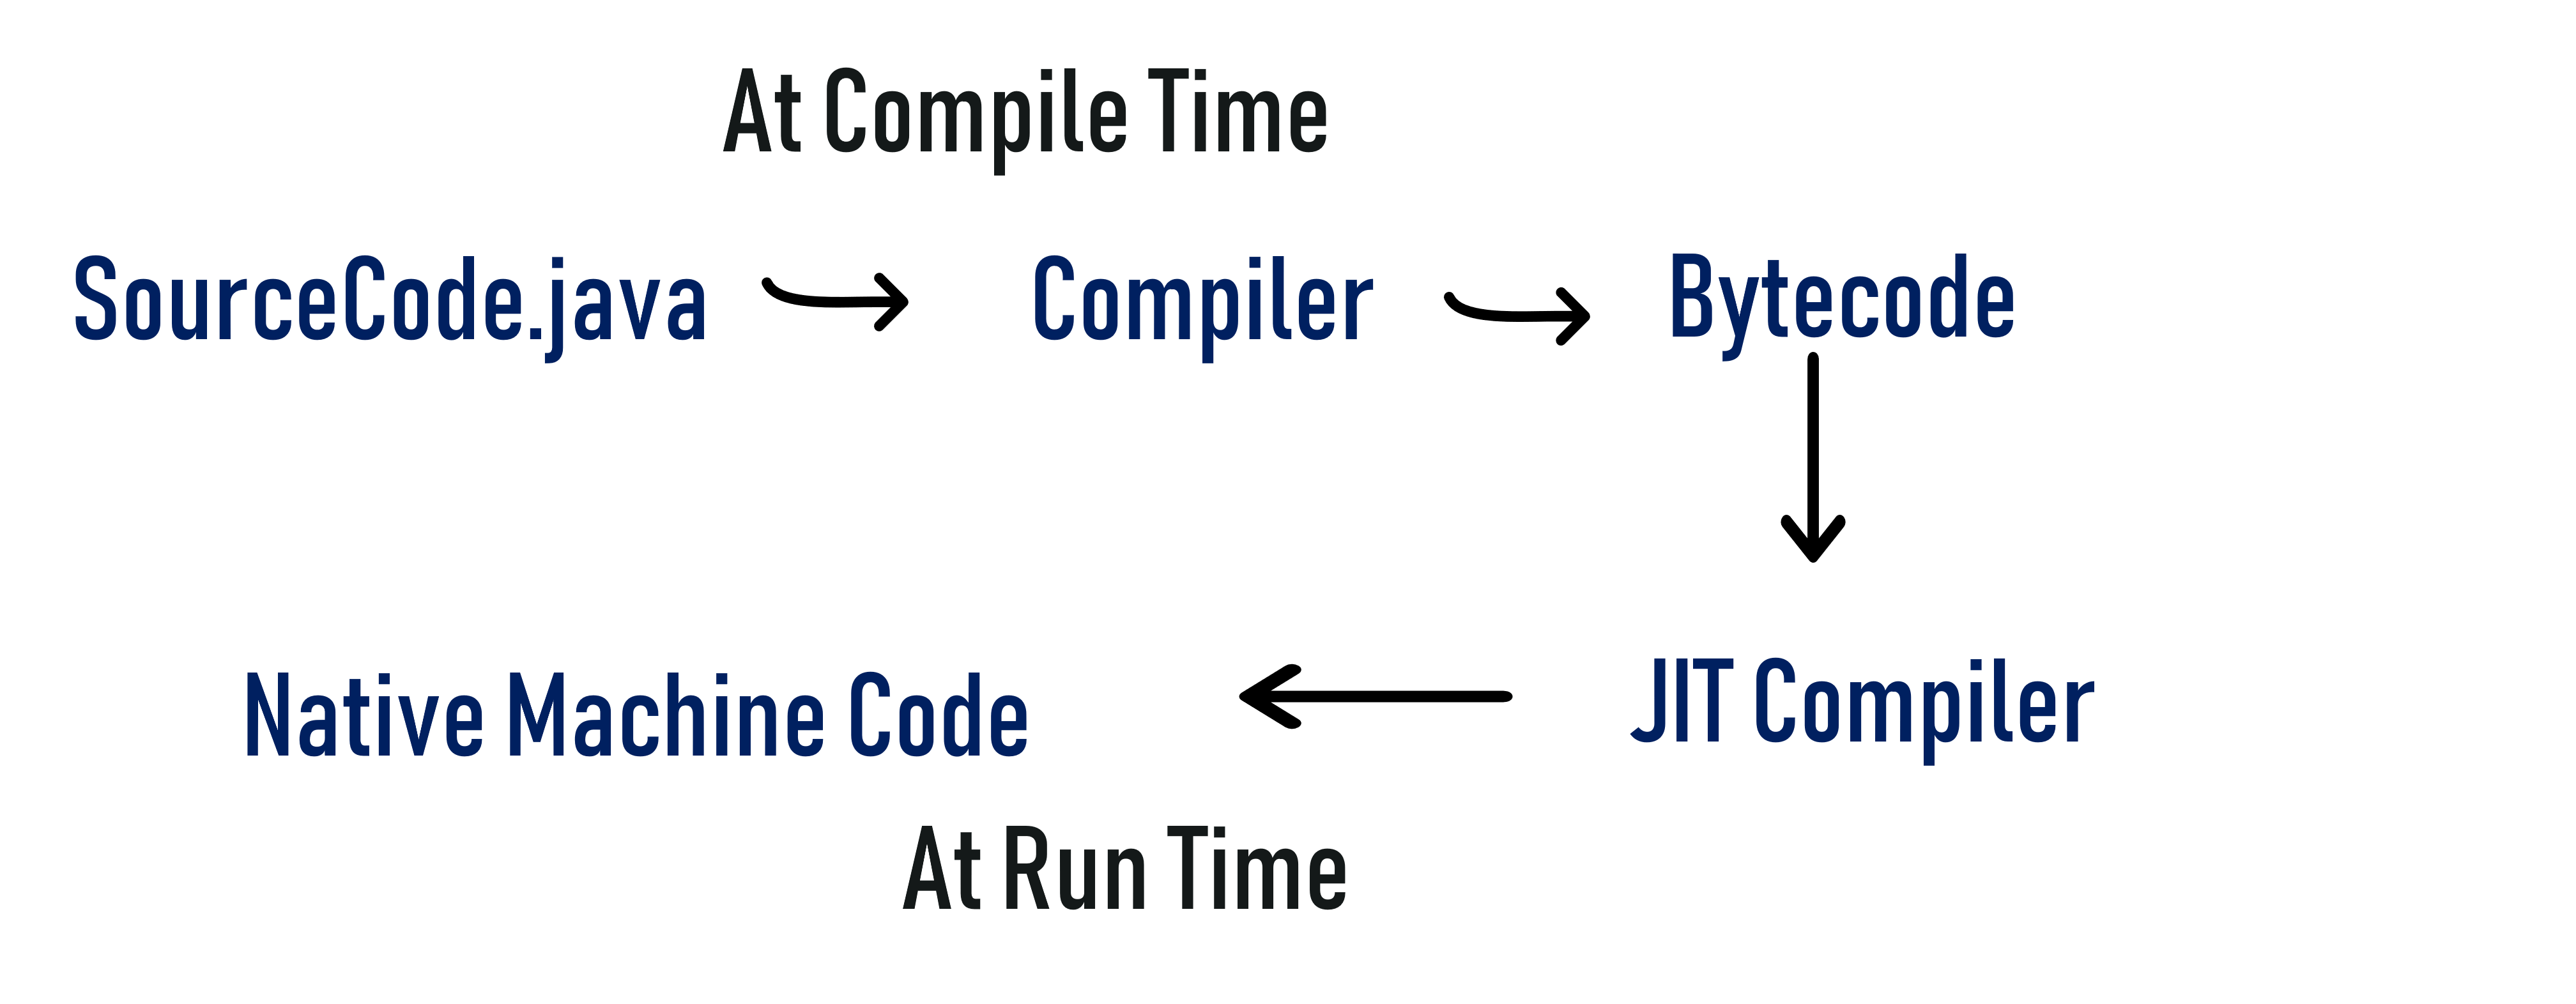 JIT workflow in Java - Java Architecture- Edureka